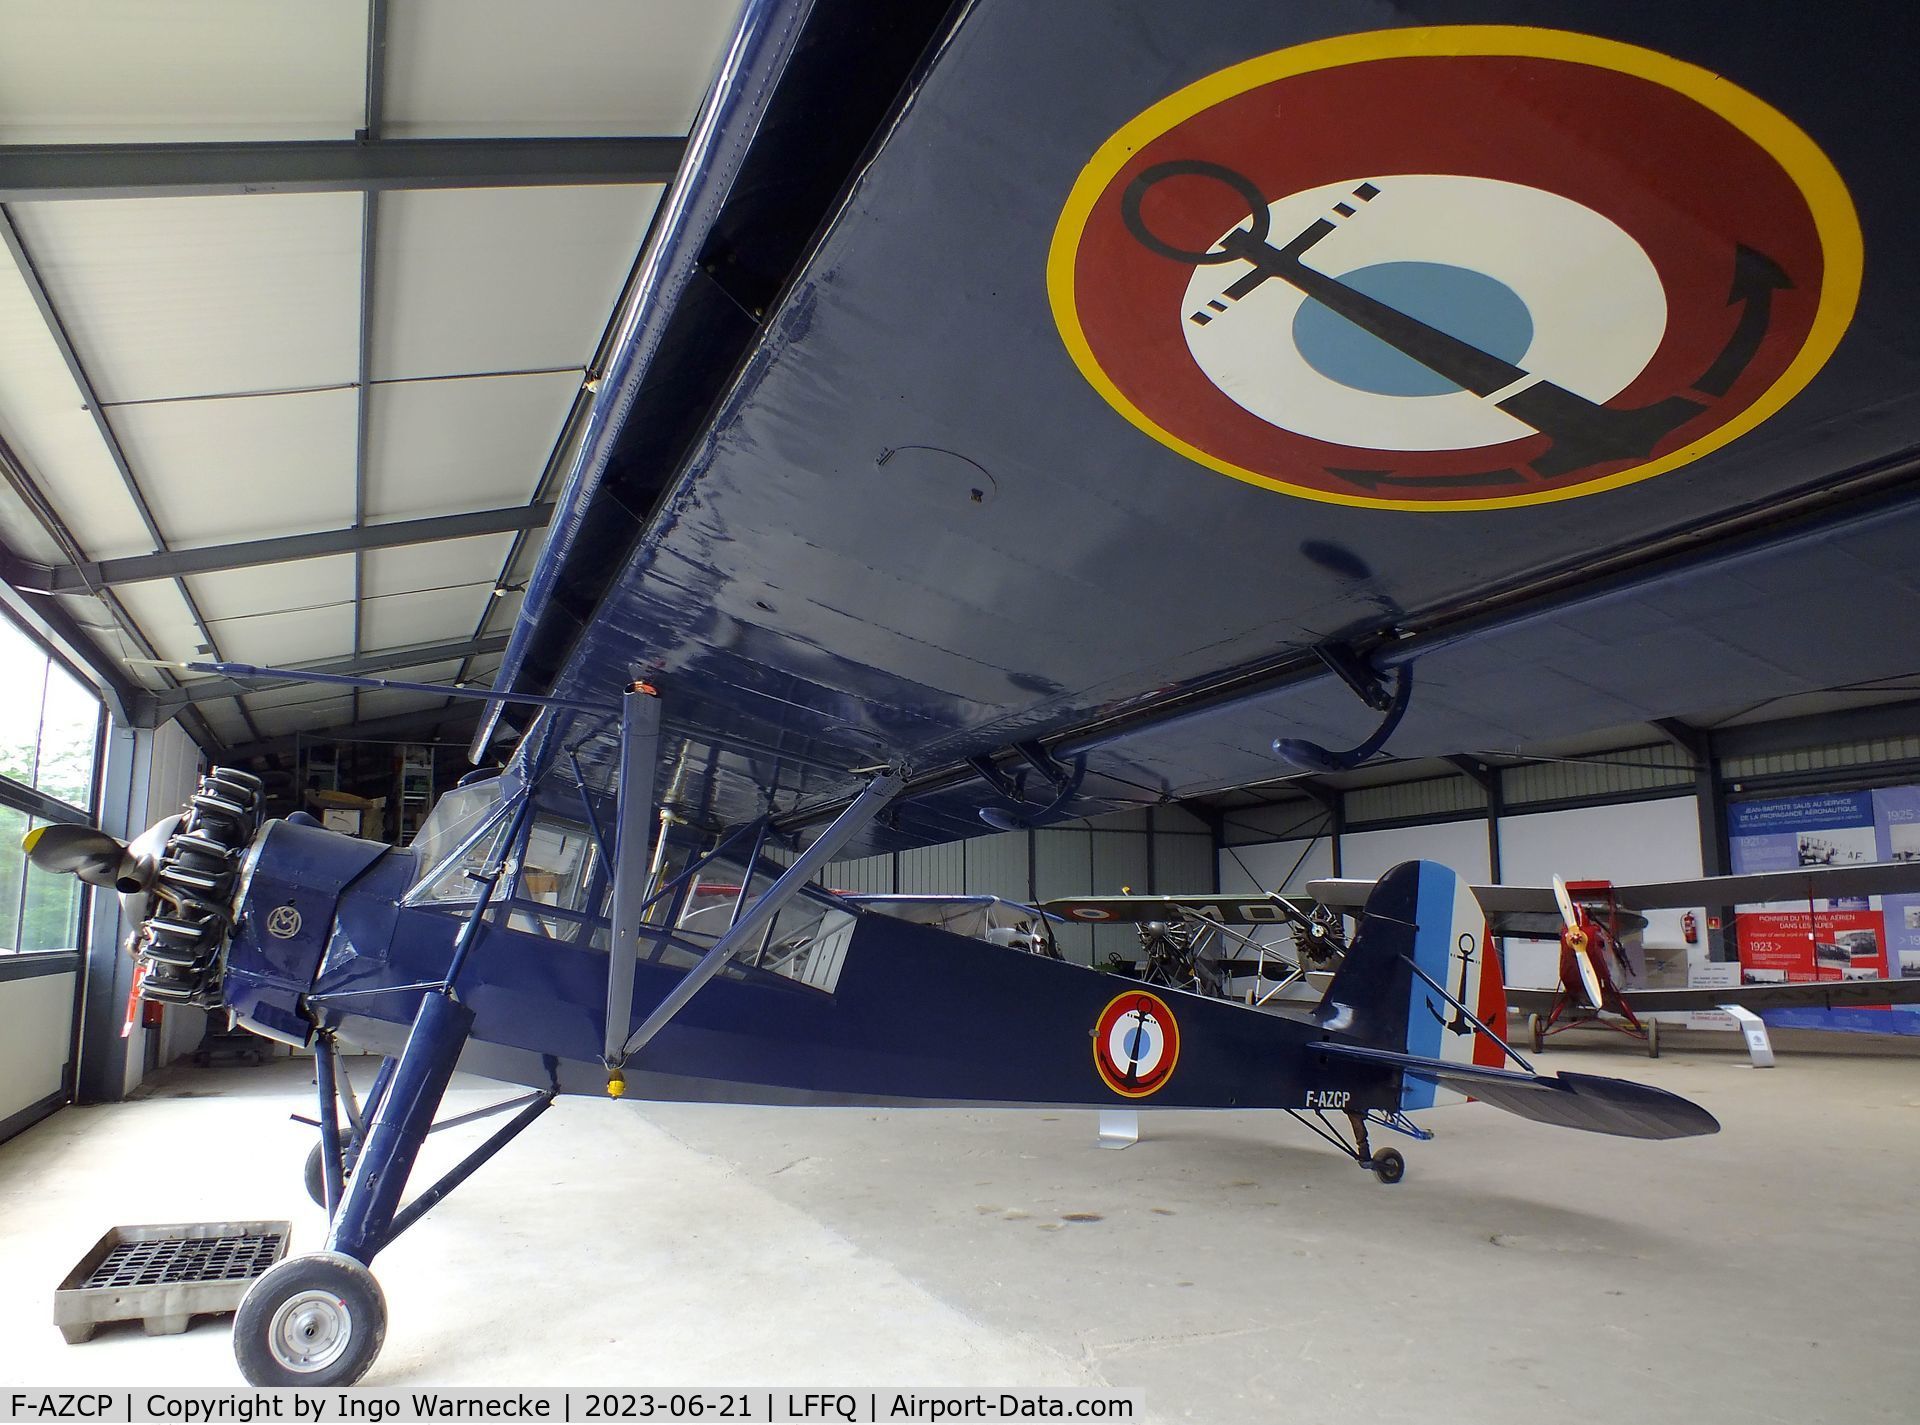 F-AZCP, Morane-Saulnier MS-502 Criquet C/N 320, Morane-Saulnier MS.502 Criquet (post-war french Fi 156 Storch with Salmson radial engine) at the Musee Volant Salis/Aero Vintage Academy, Cerny